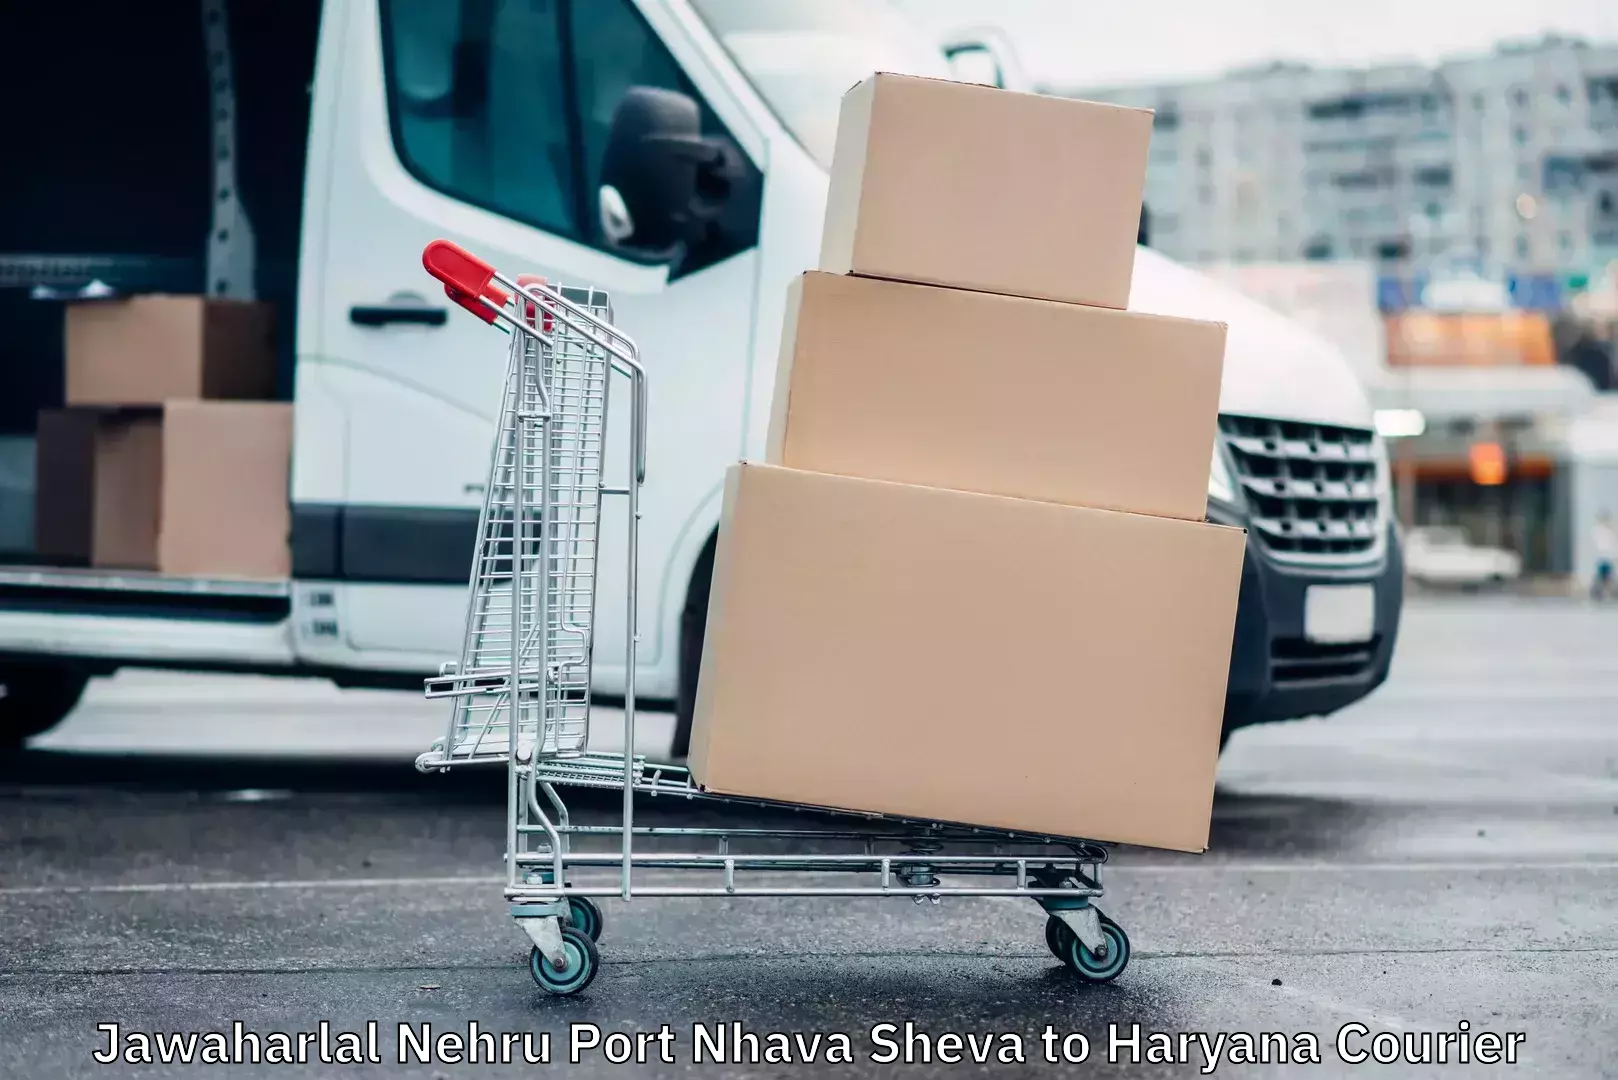 Personalized courier experiences Jawaharlal Nehru Port Nhava Sheva to Haryana